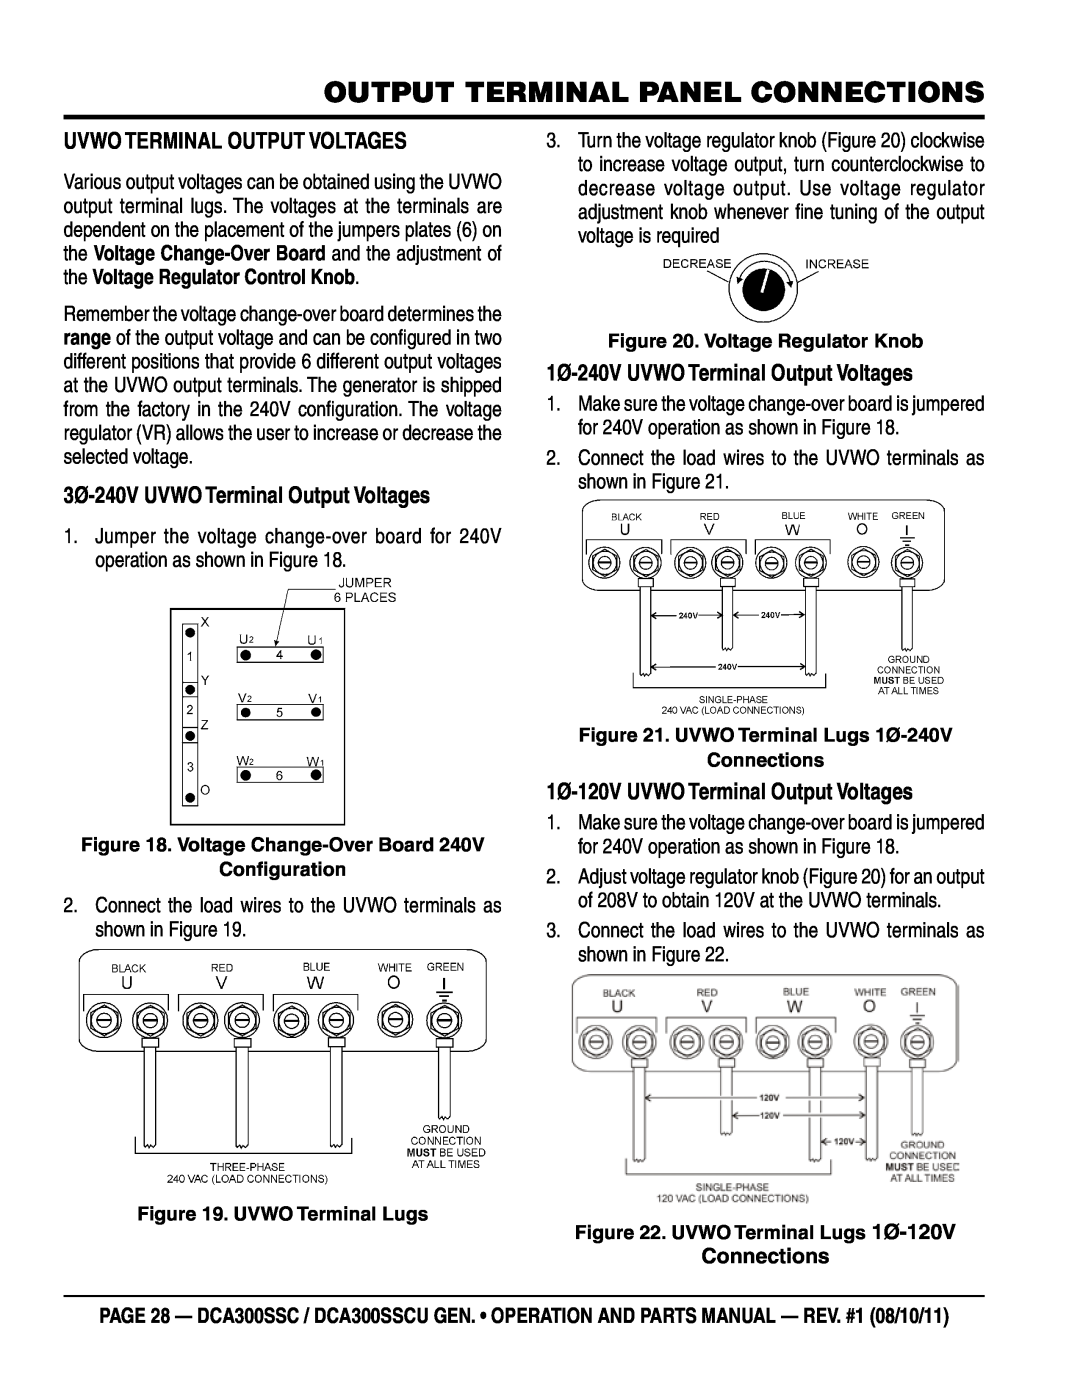 Multiquip DCA300SSCU manual Output Terminal Panel Connections, UVWO Terminal Output Voltages, Voltage Regulator Knob 